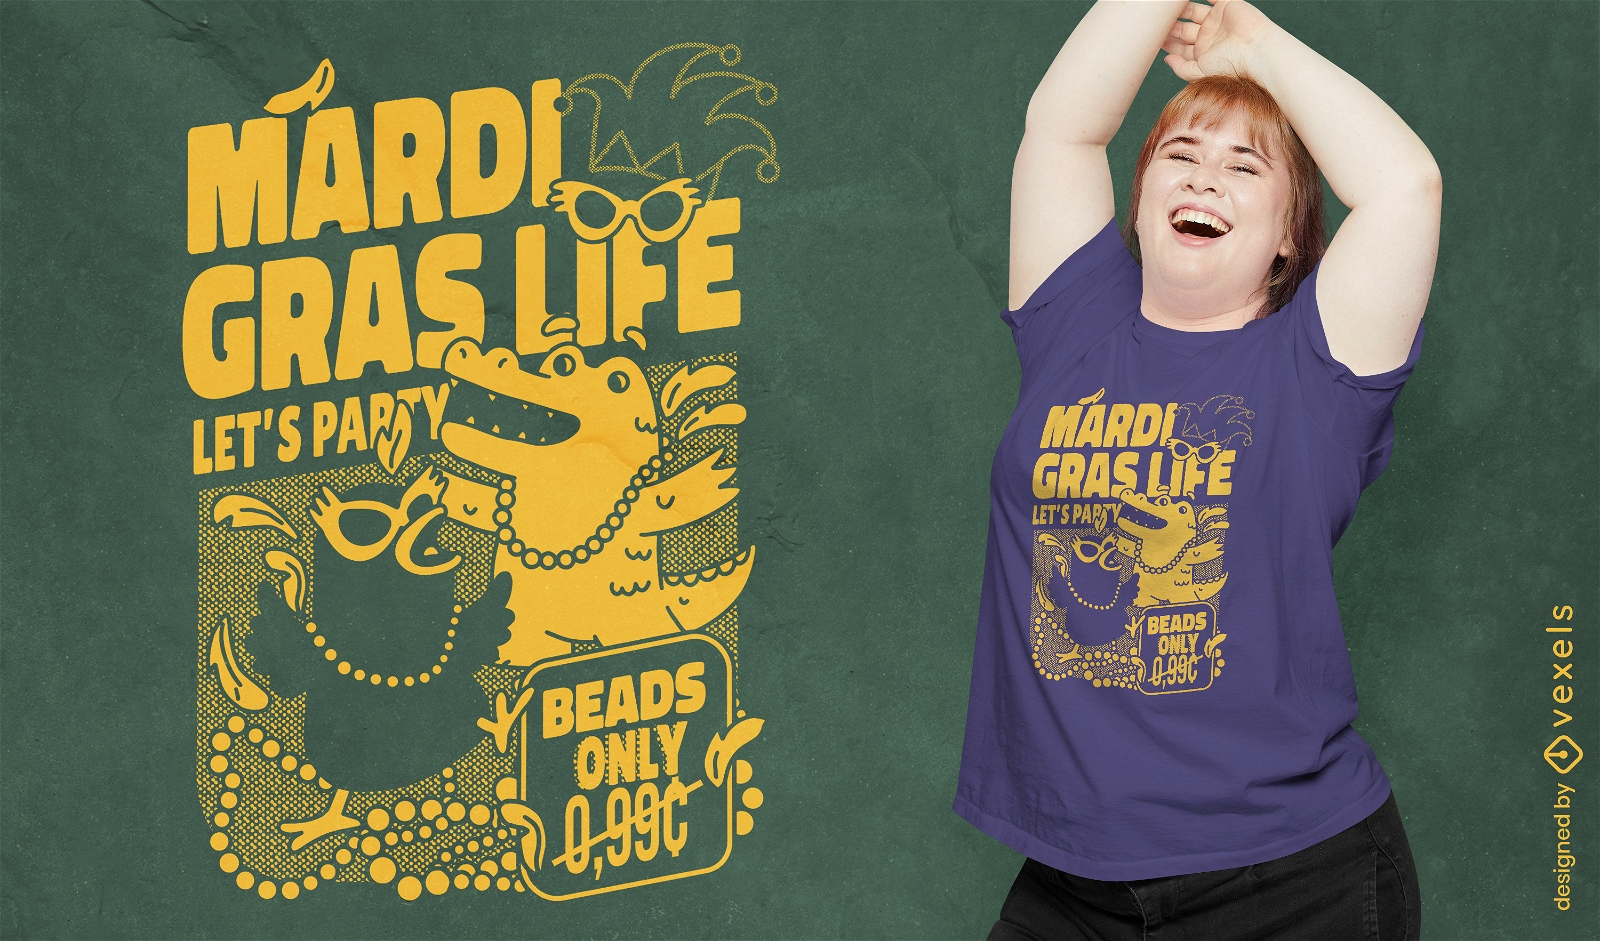 Mardi Gras animals party t-shirt design